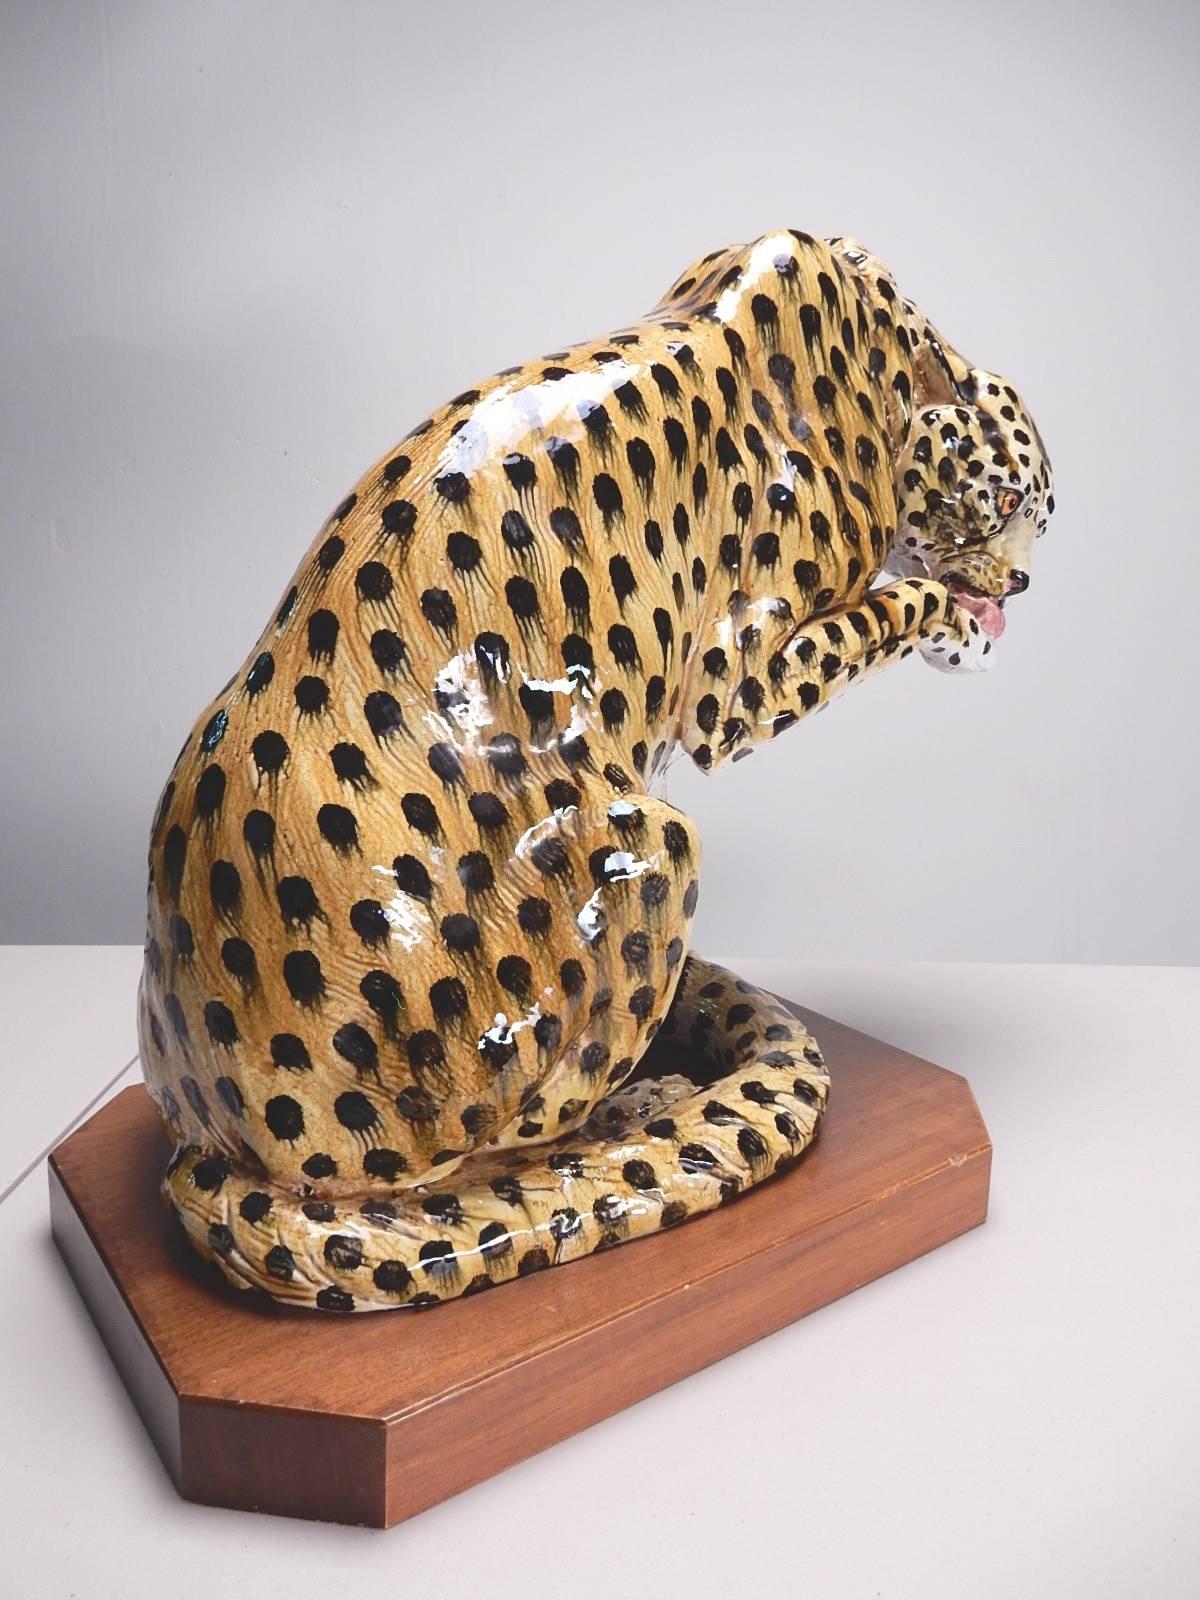 ceramic cheetah ornament